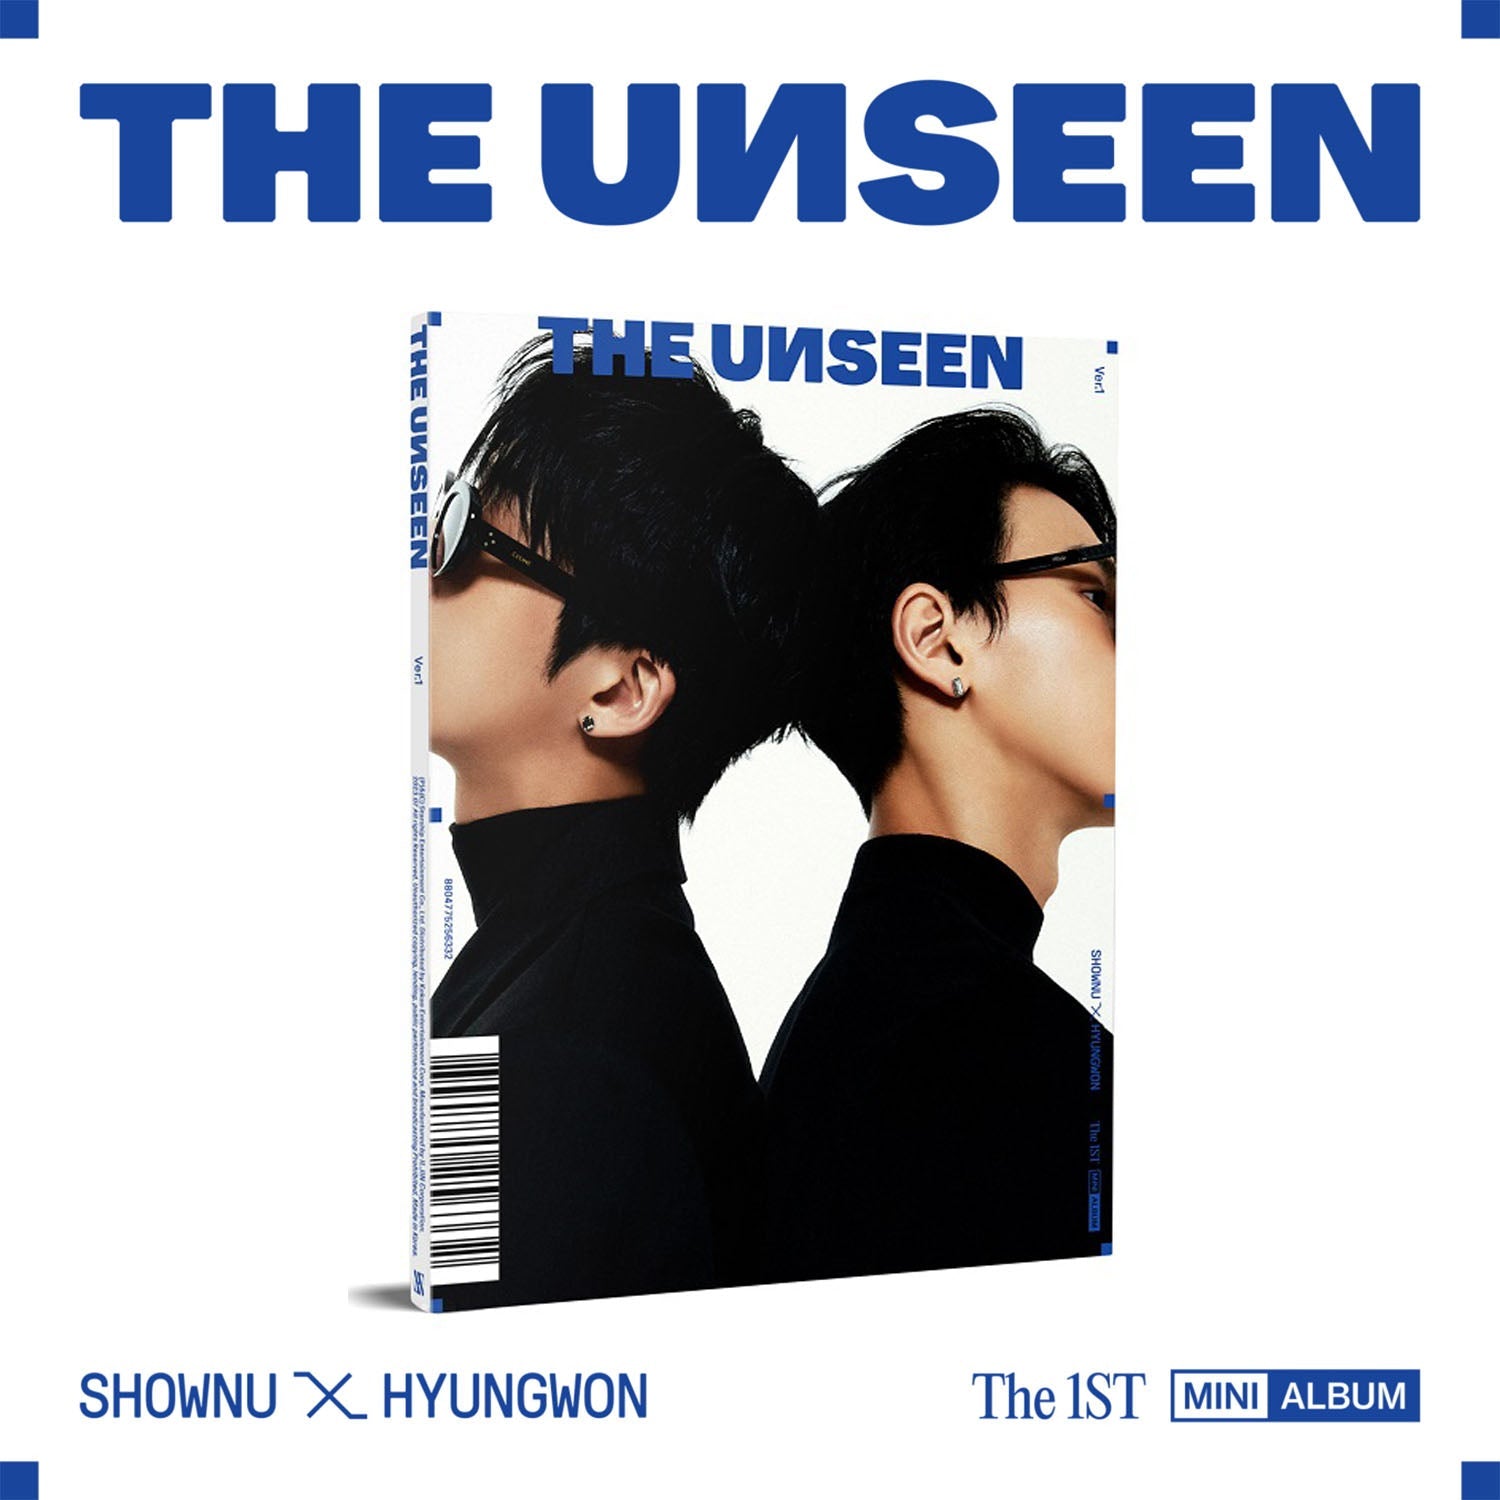 SHOWNU X HYUNGWON 1ST MINI ALBUM 'THE UNSEEN' VERSION 1 COVER